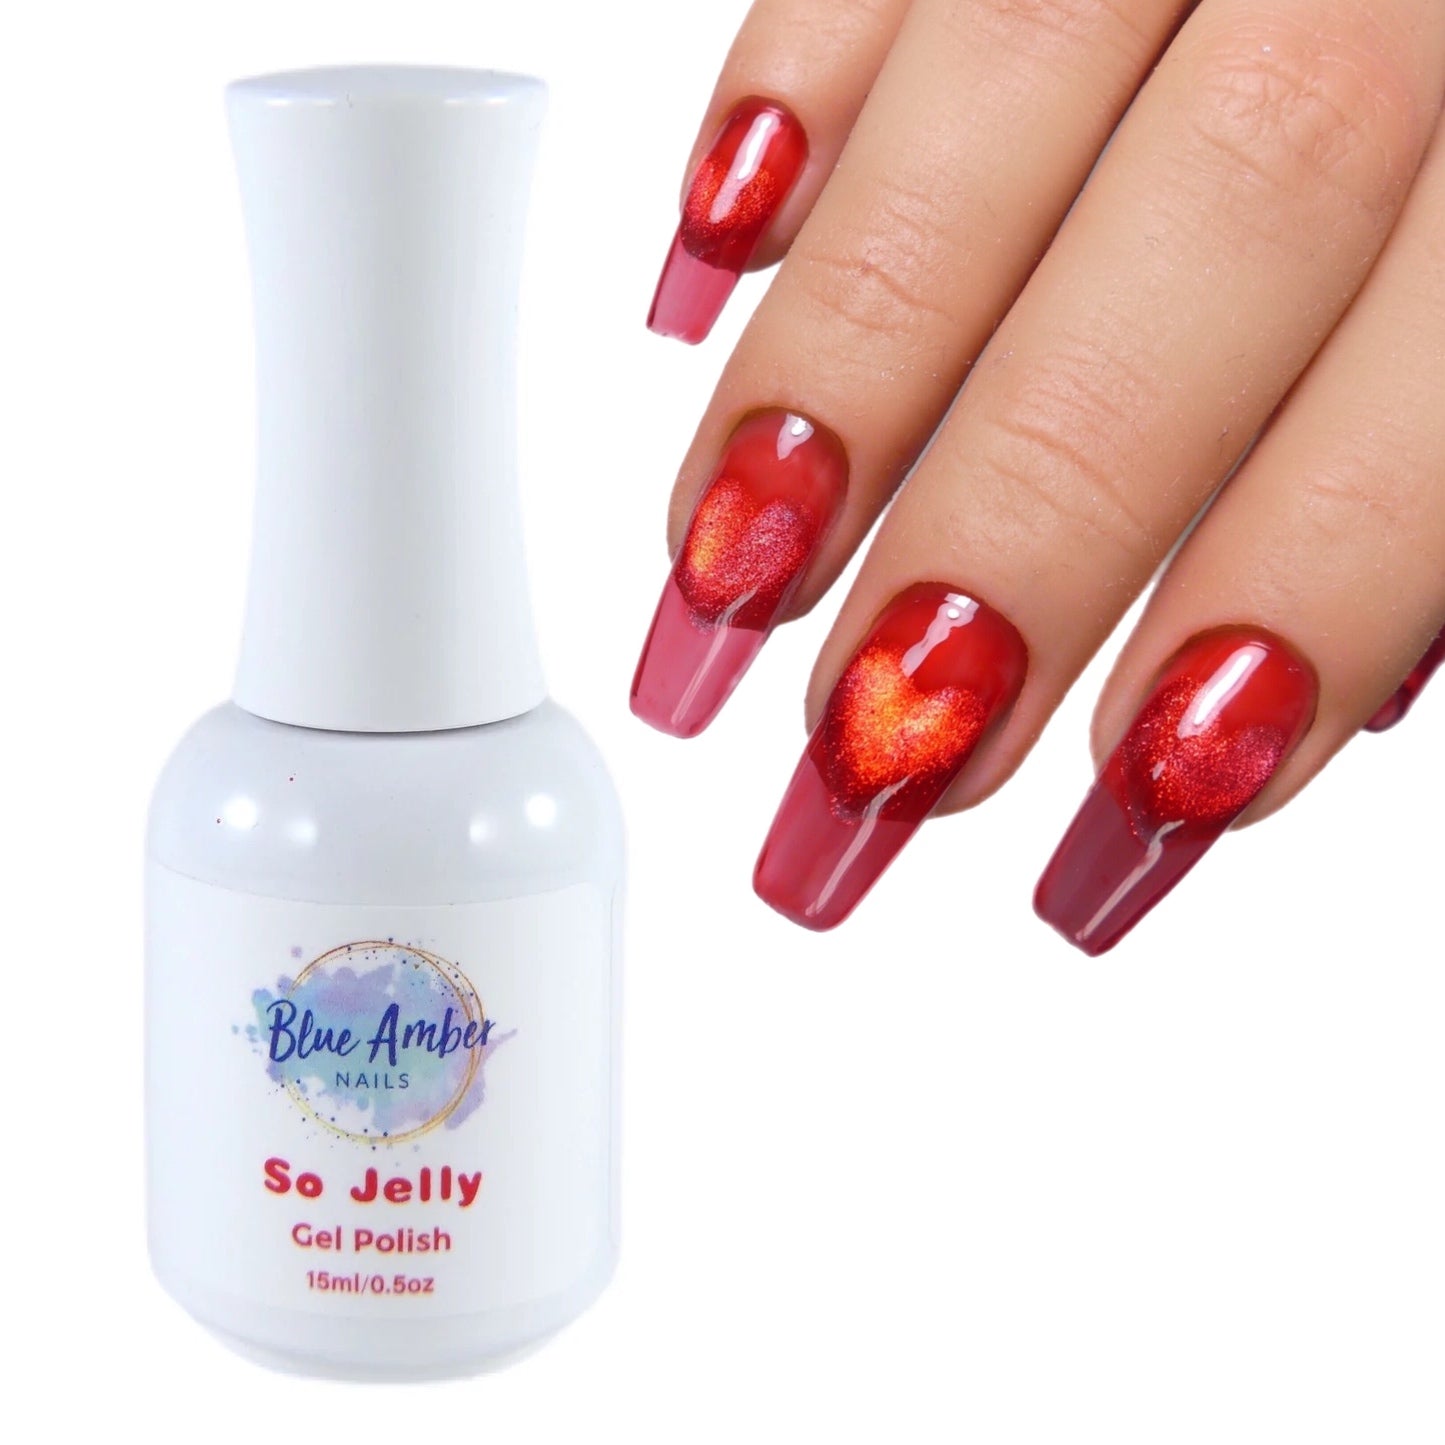 So Jelly Gel Polish - Red